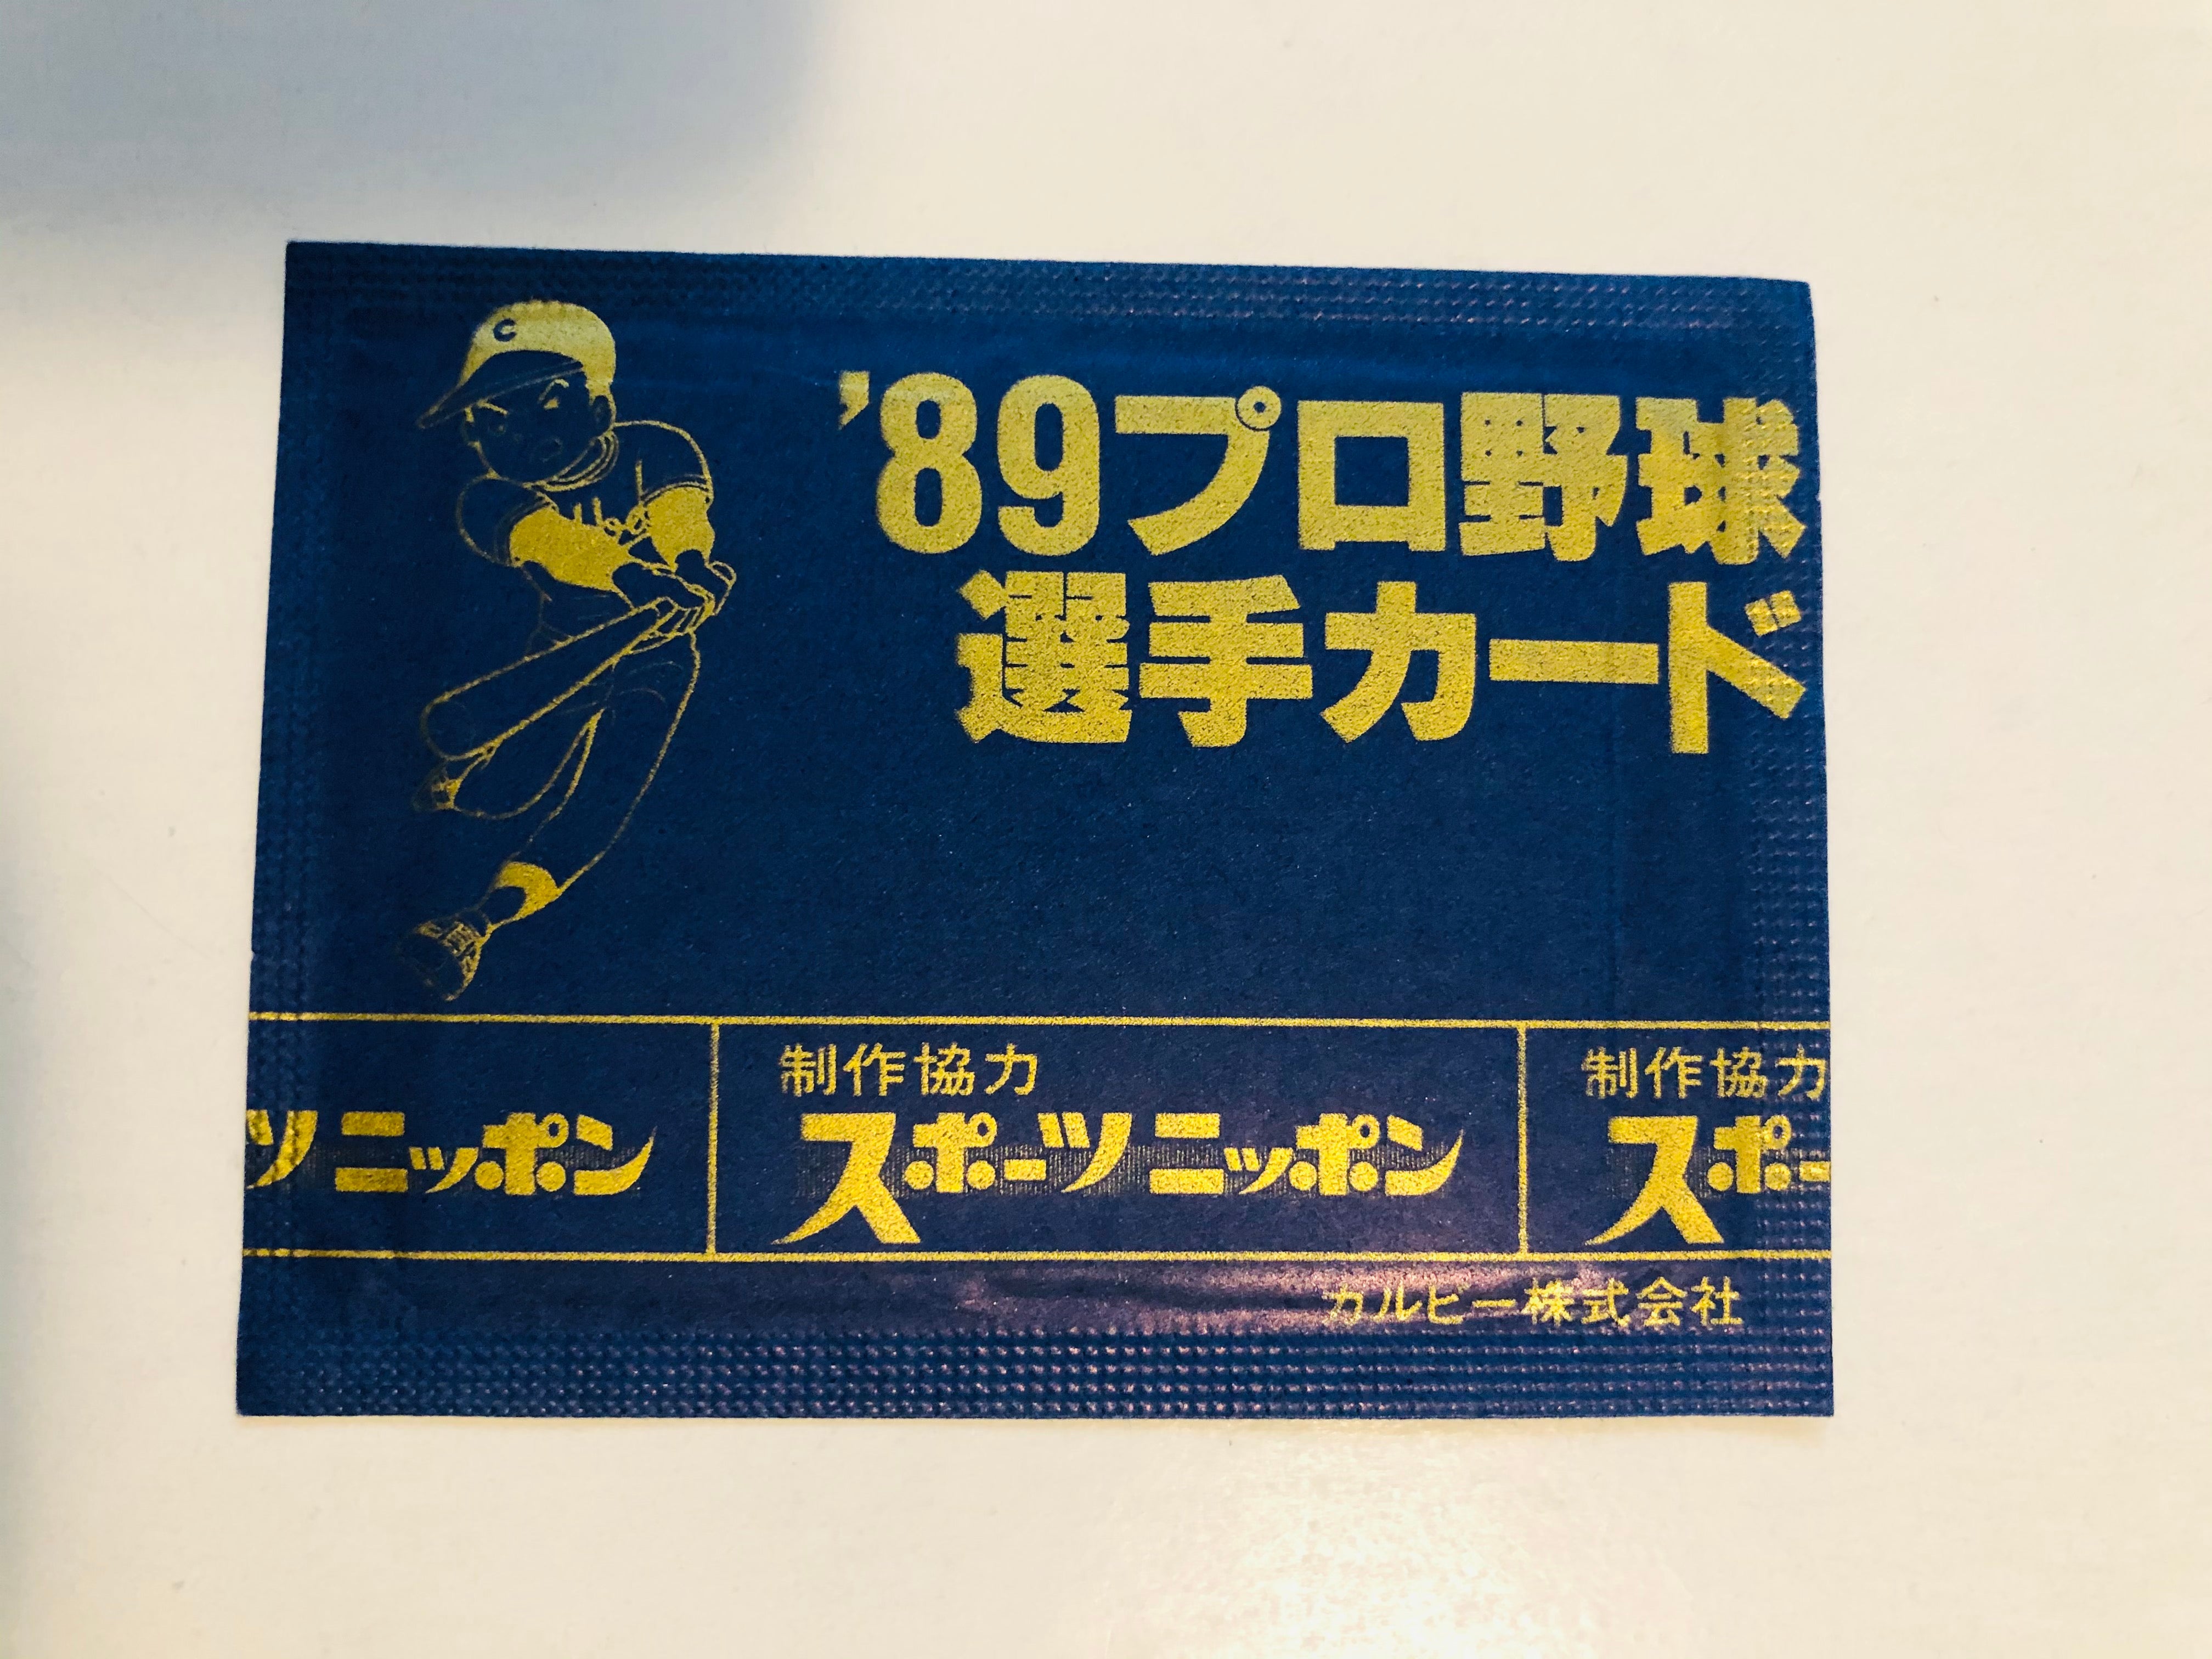 Japanese rare baseball cards pack from 1989